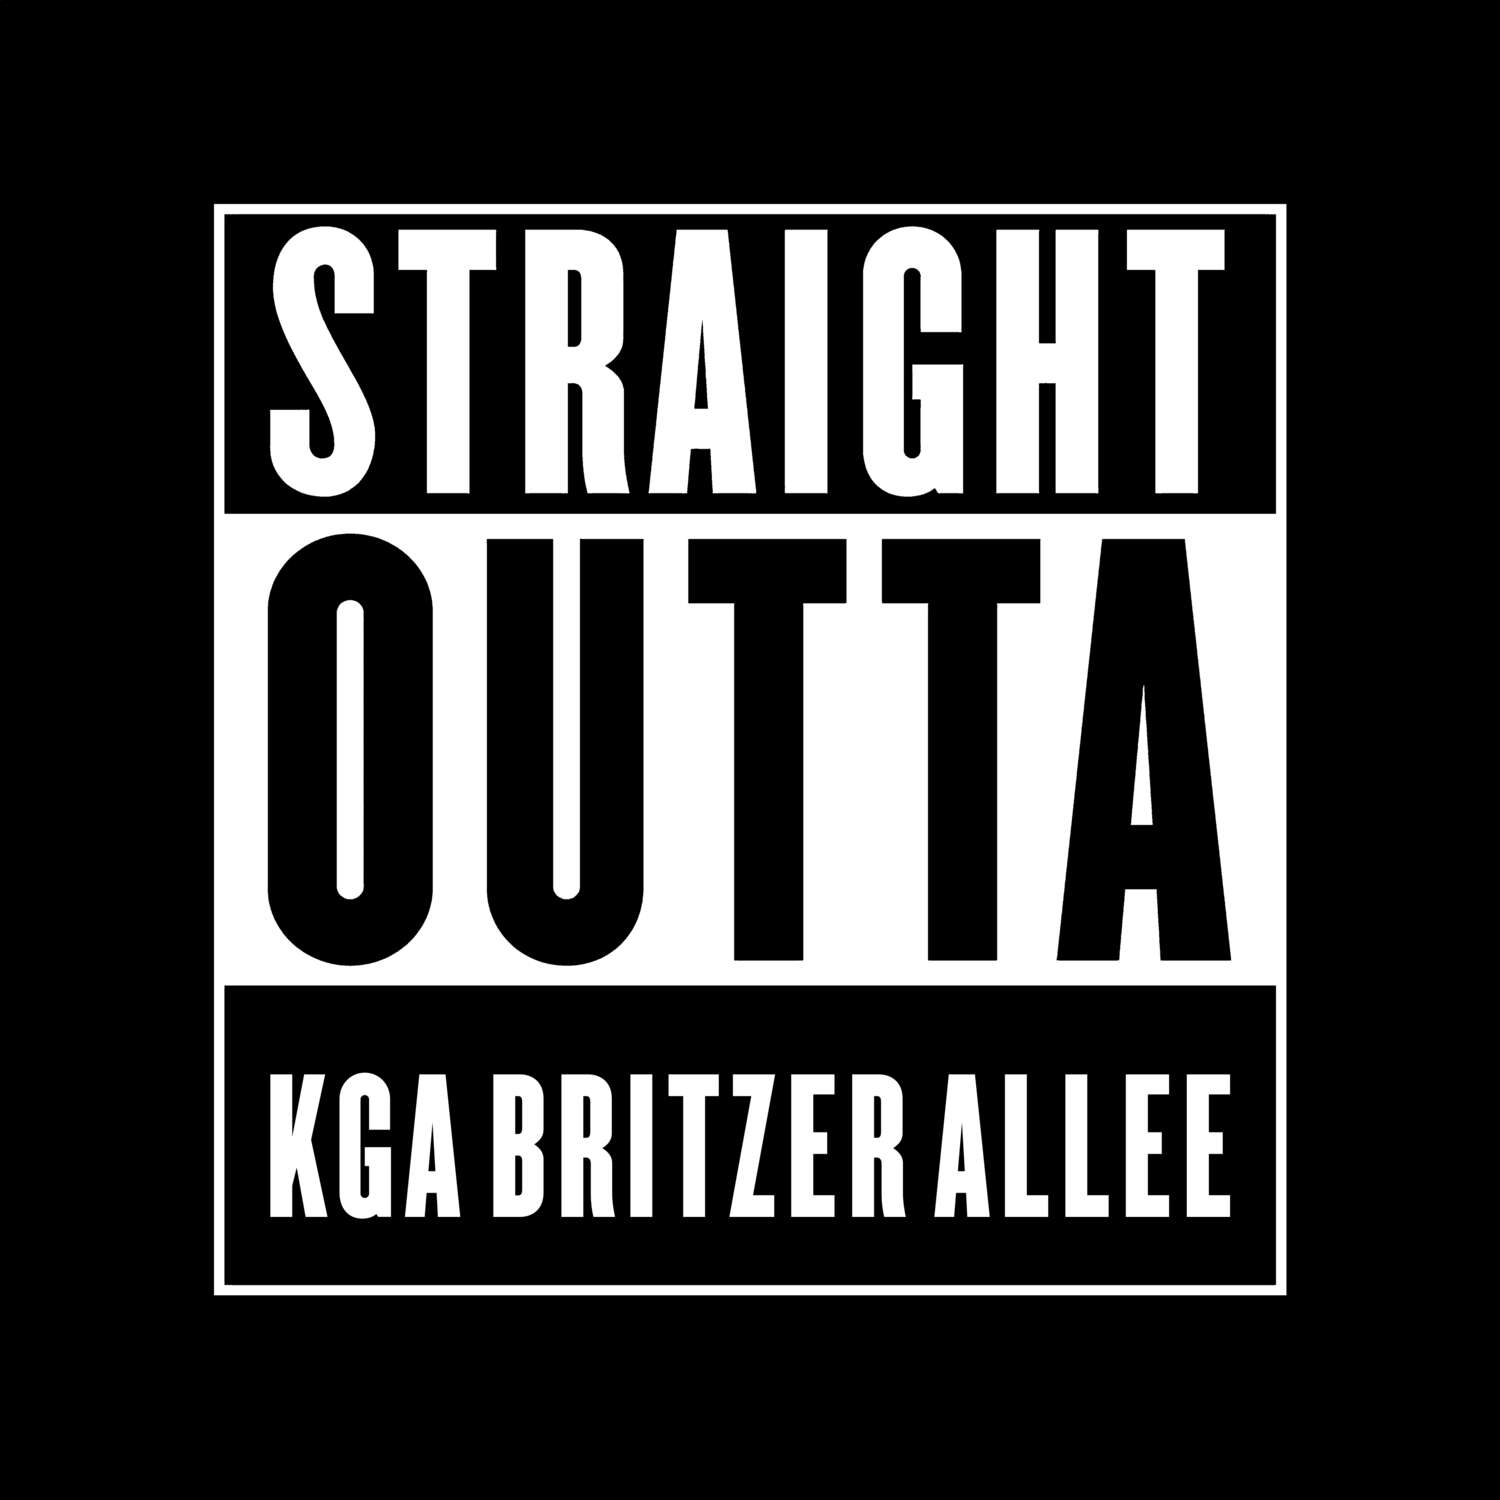 KGA Britzer Allee T-Shirt »Straight Outta«